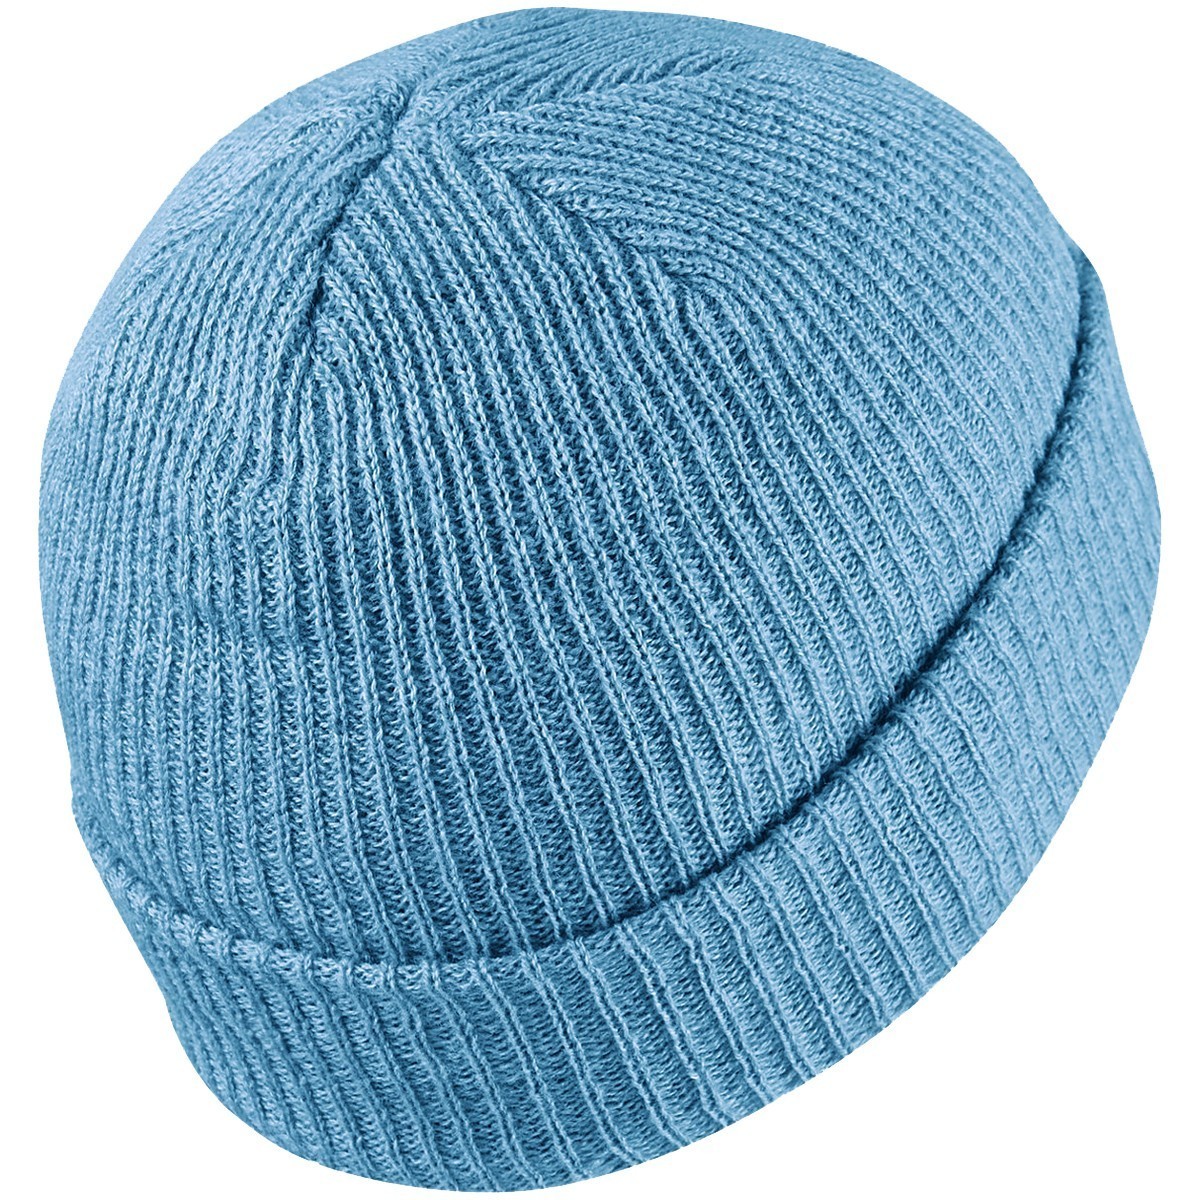 nike sb fisherman knit hat